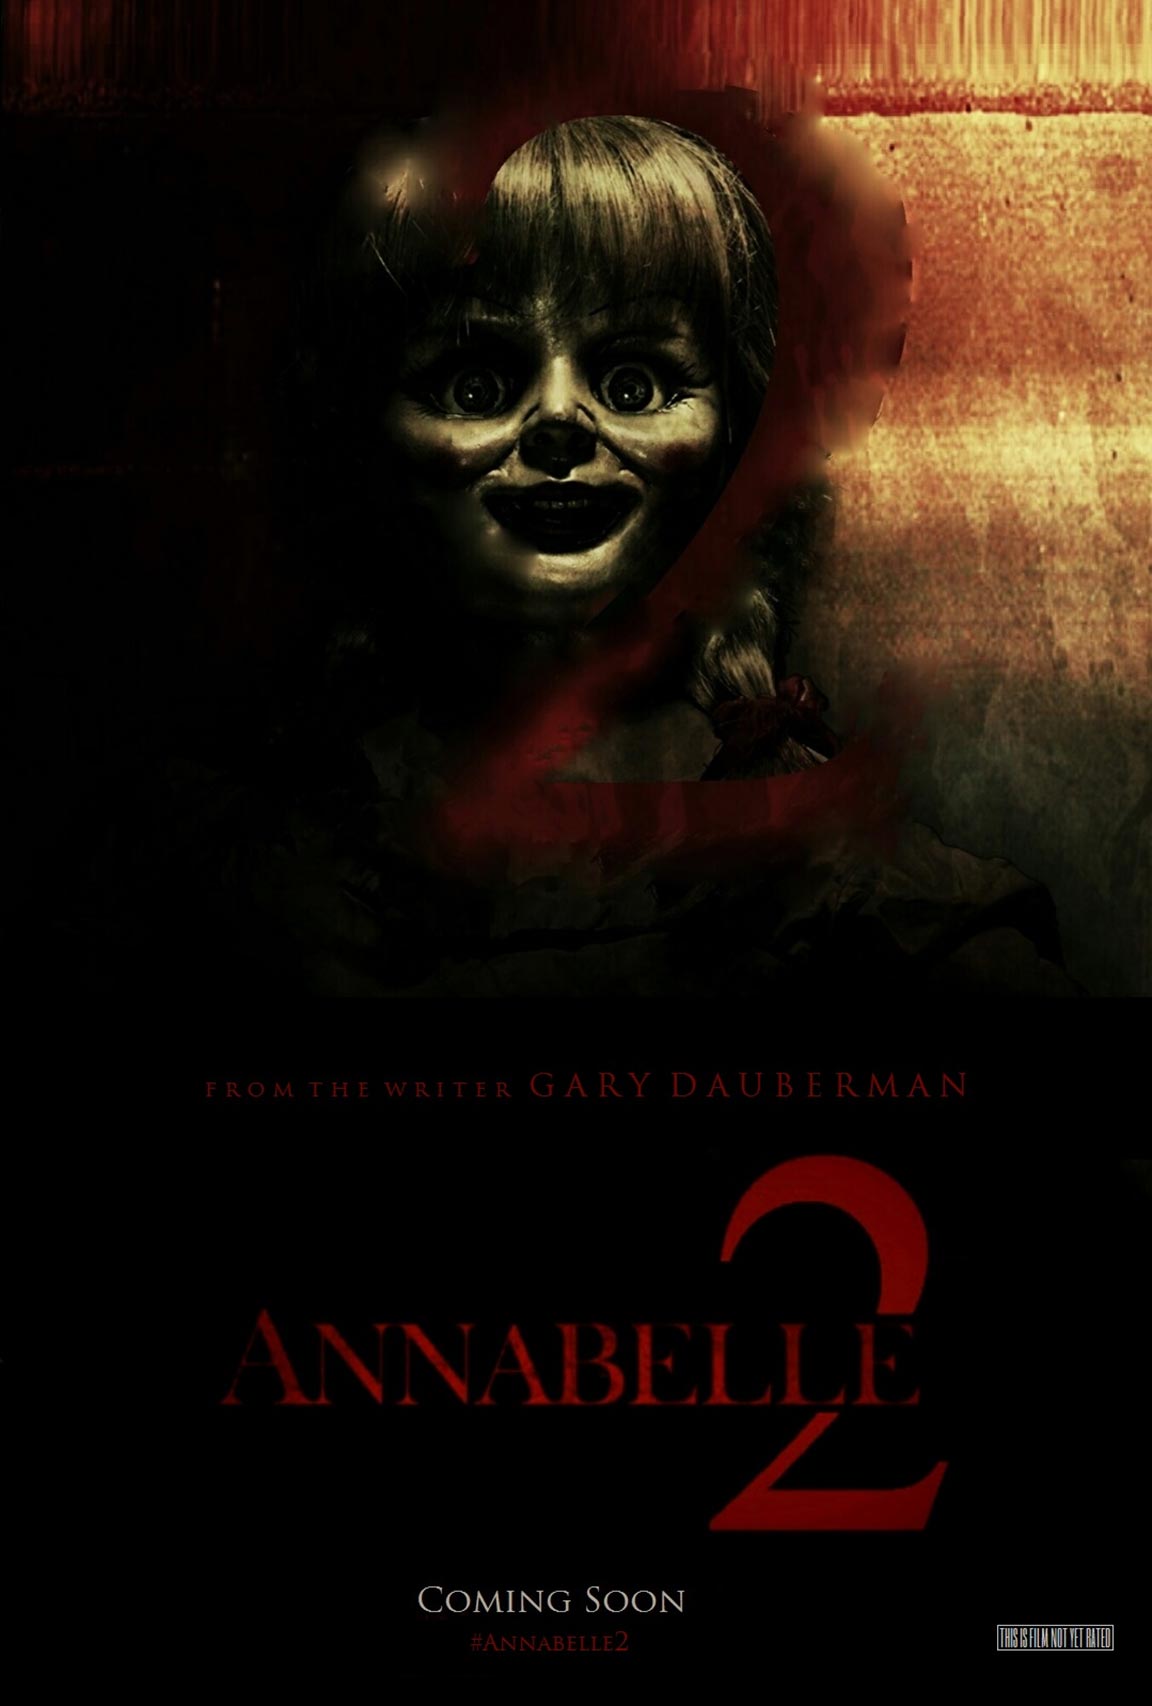  Annabelle 2 (2017) Poster 